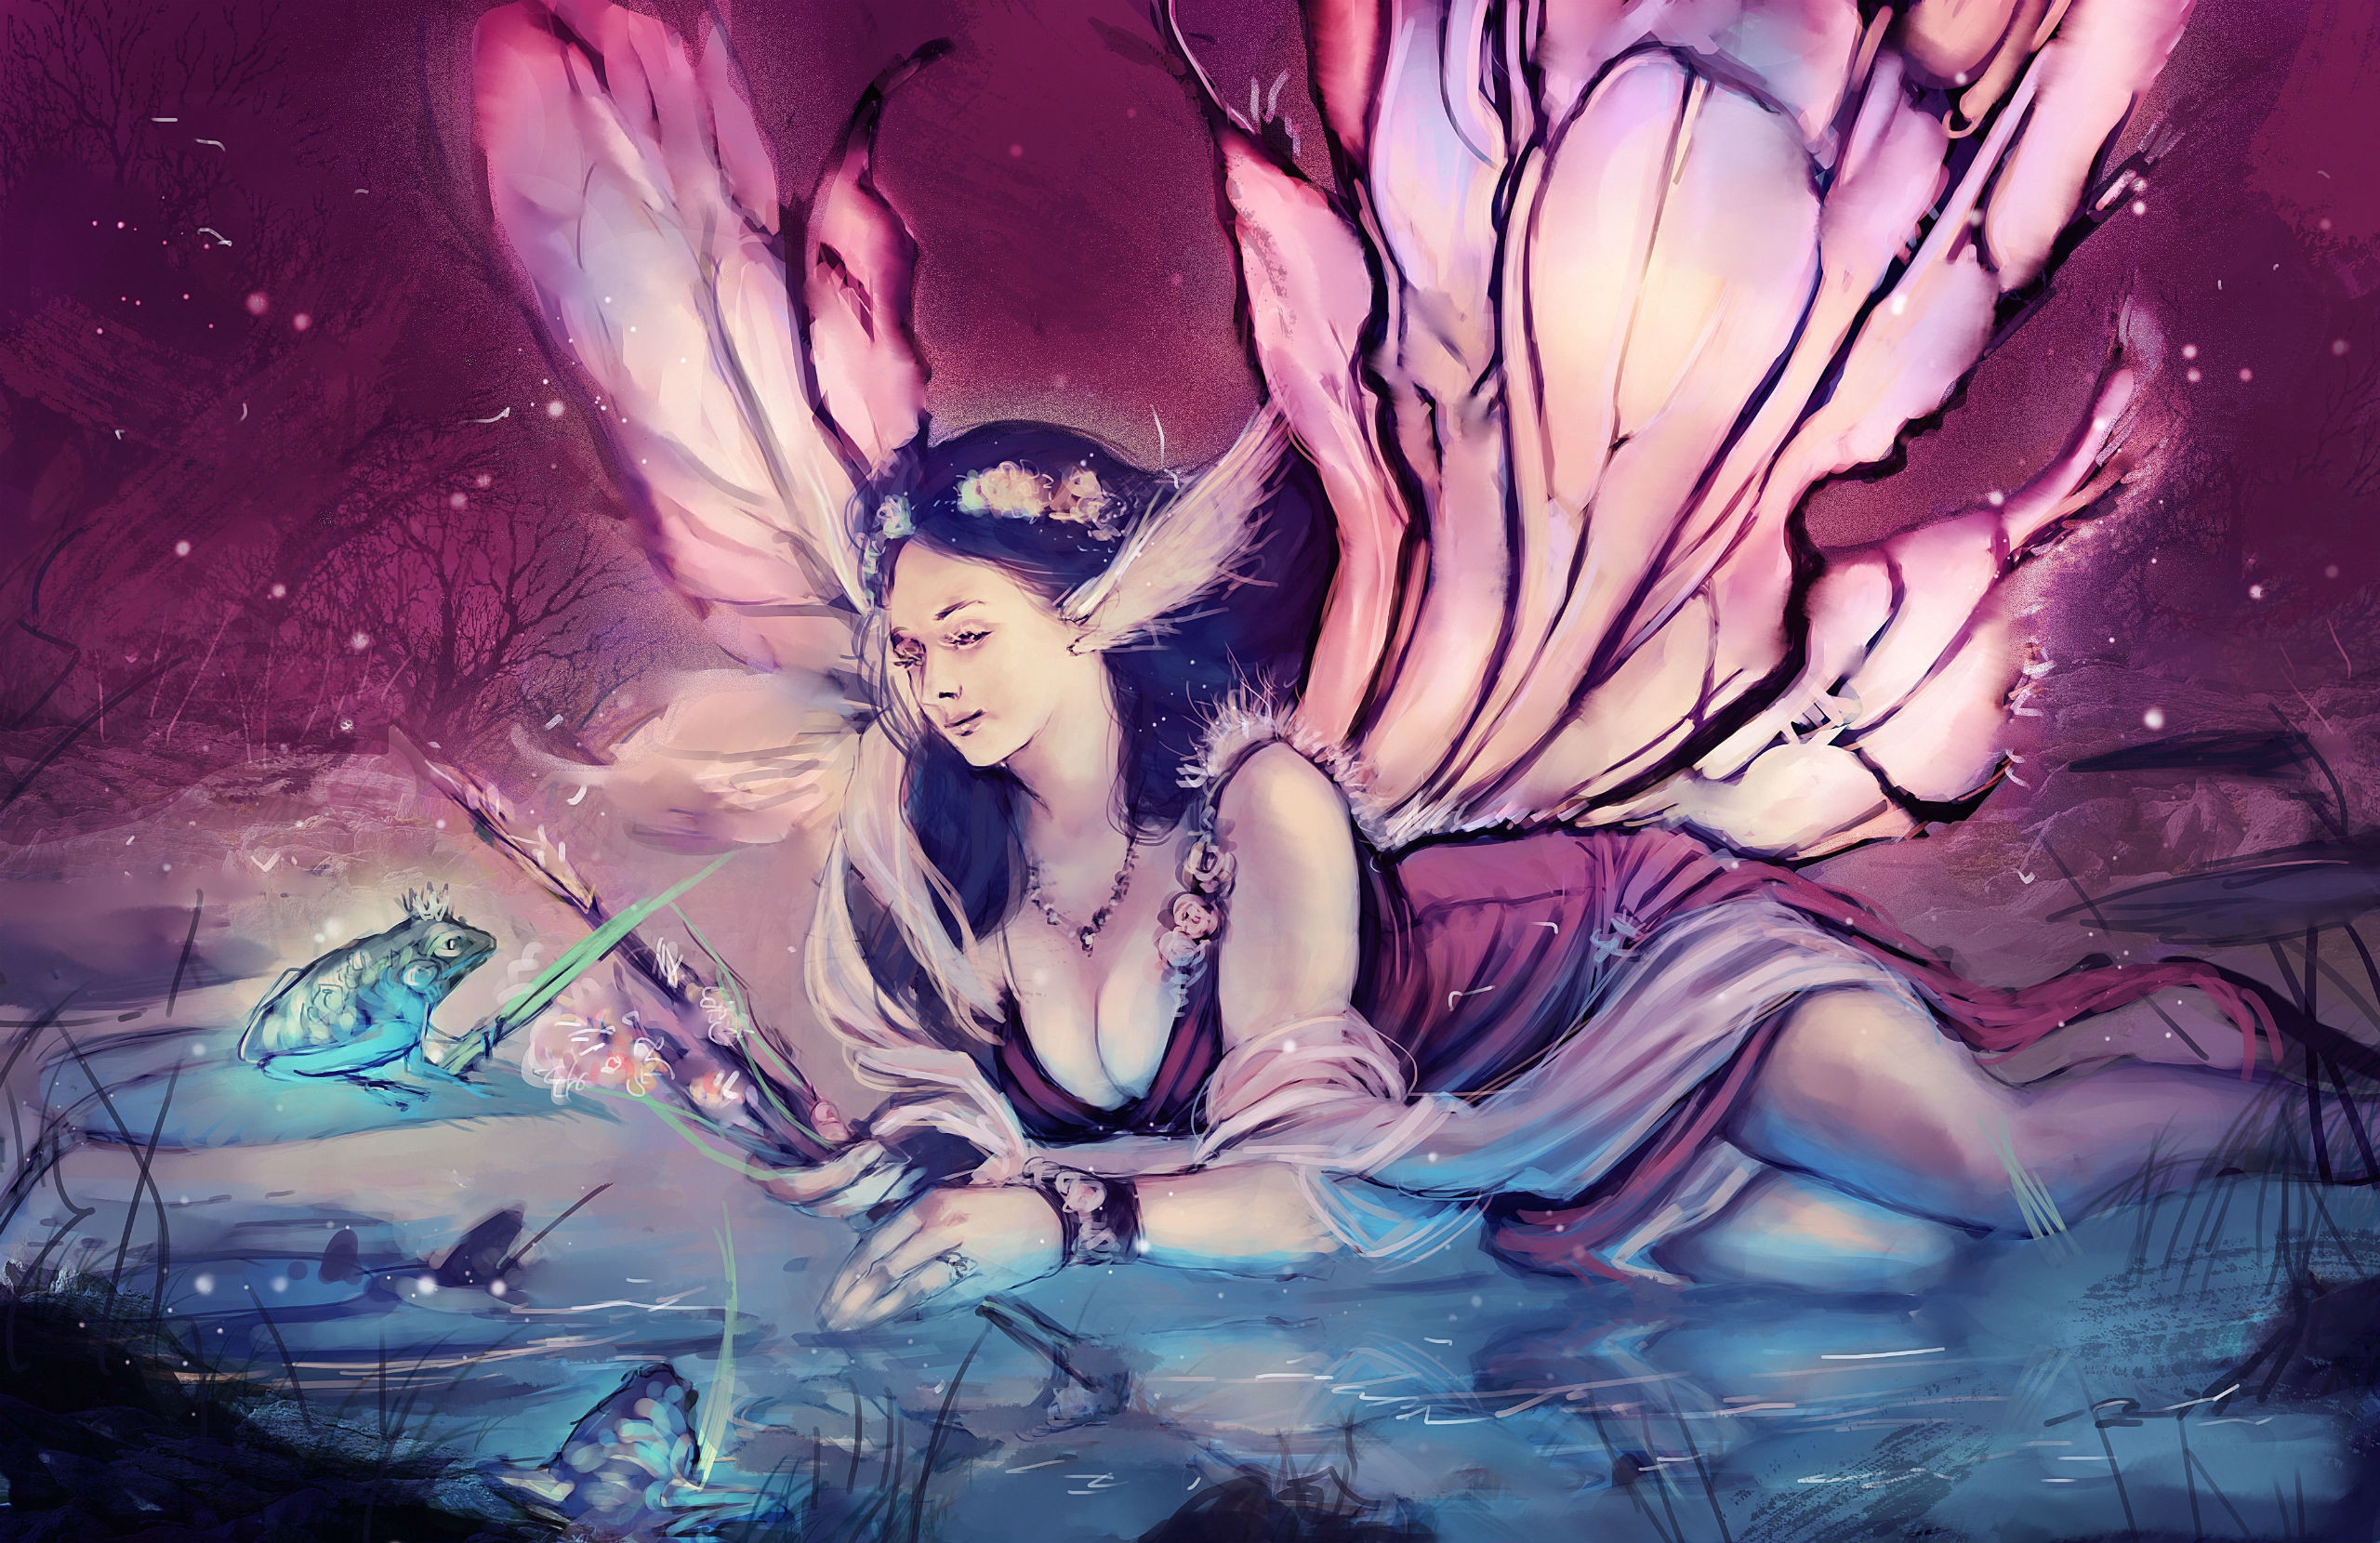 beautiful animated fairies